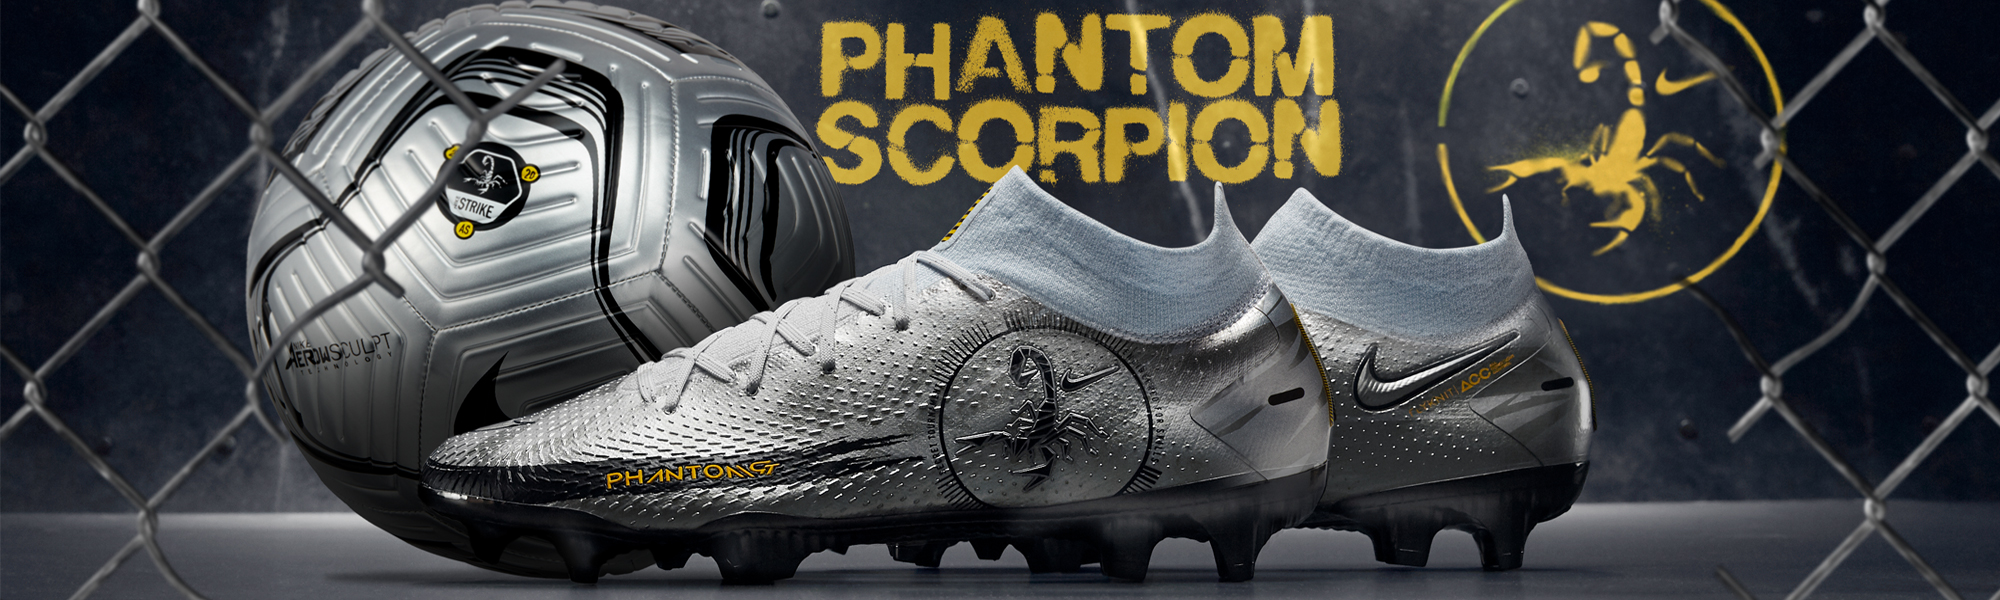 soccer shoes nike phantom